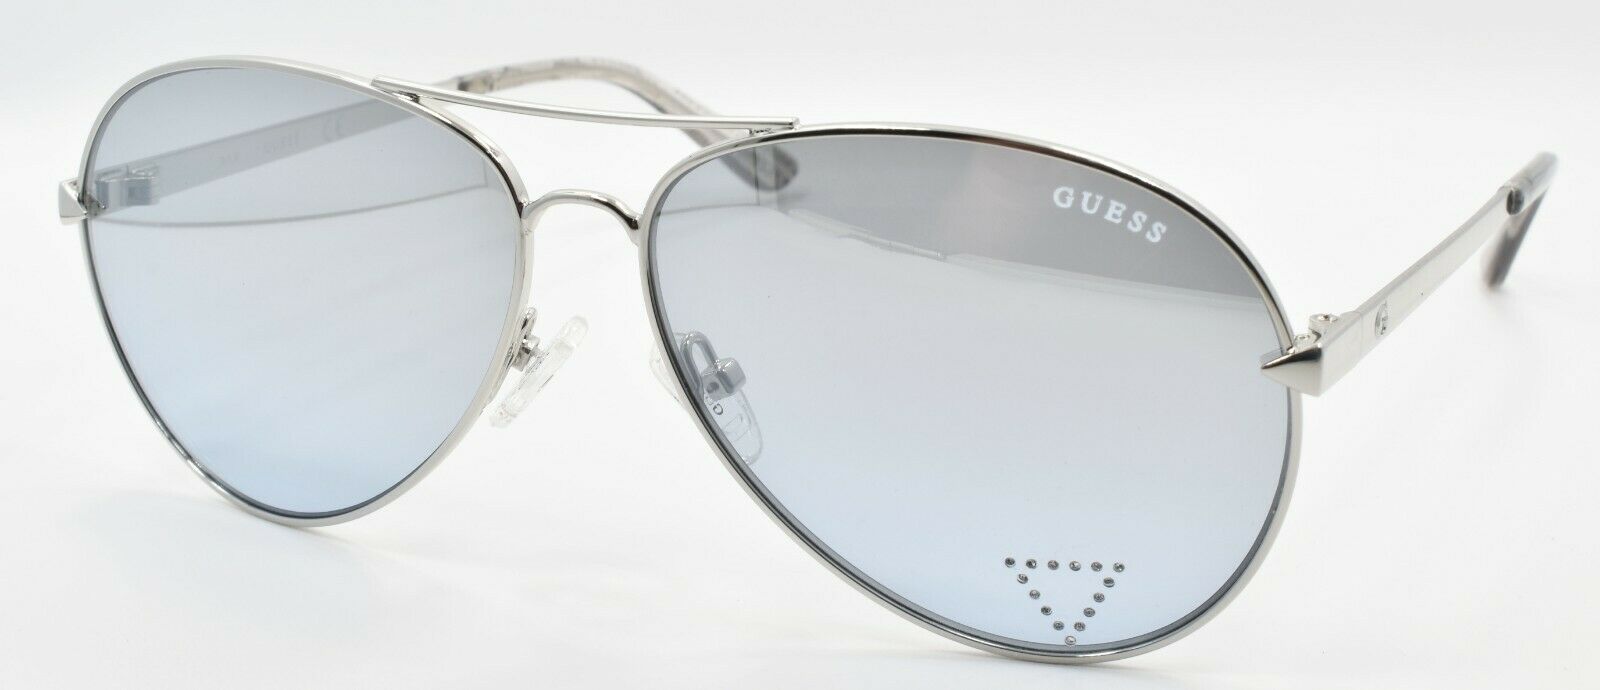 1-GUESS GU7616-S 10X Women's Sunglasses Aviator 58-12-140 Shiny Nickeltin / Blue-889214091475-IKSpecs